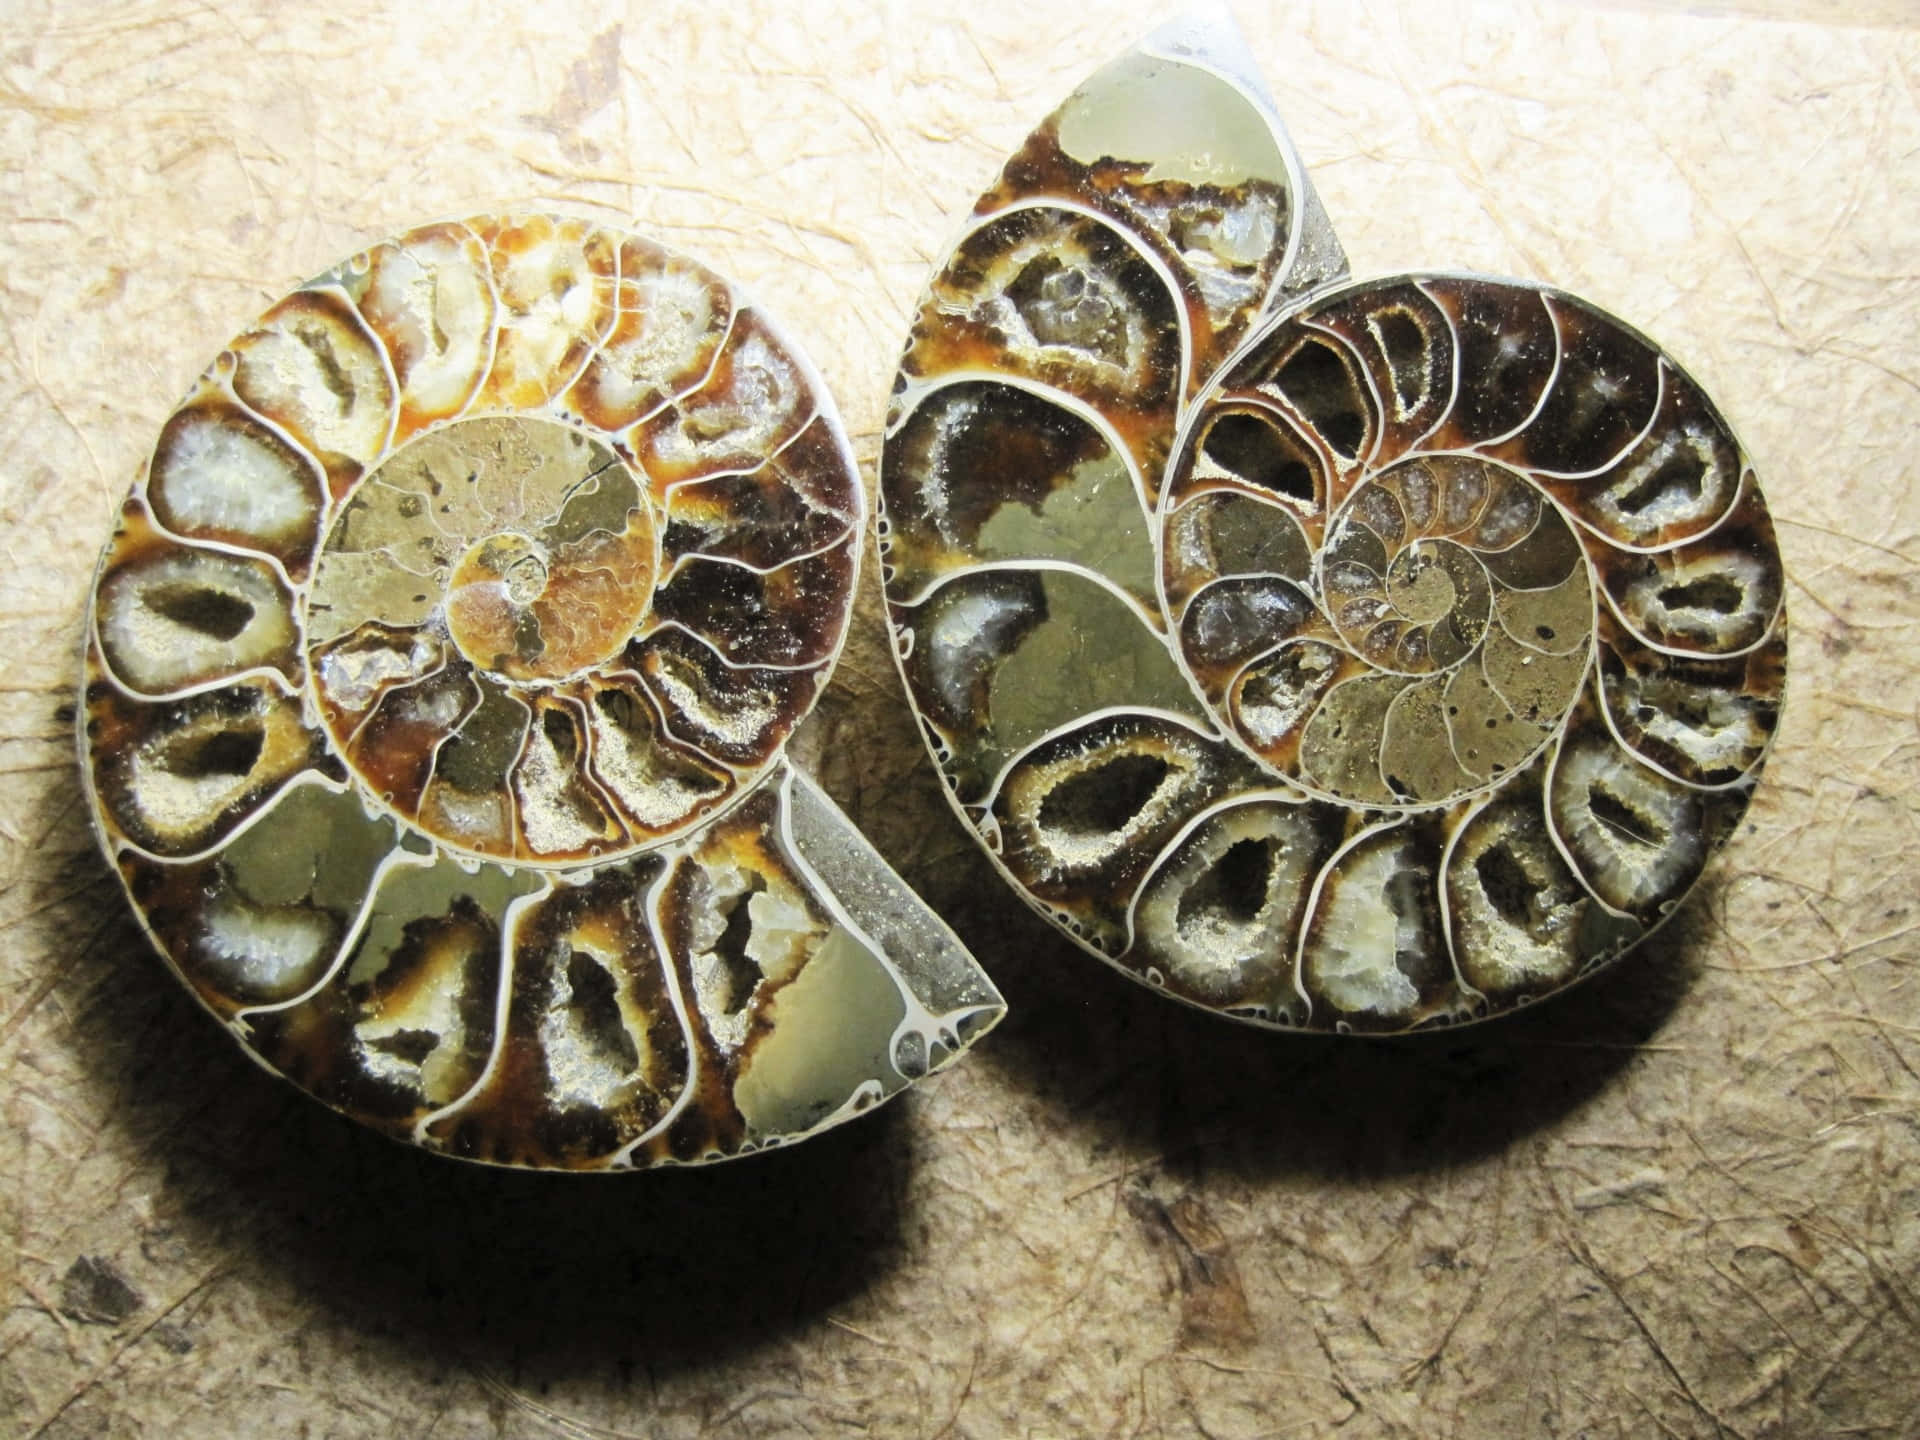 Polished Ammonite Fossils Wallpaper